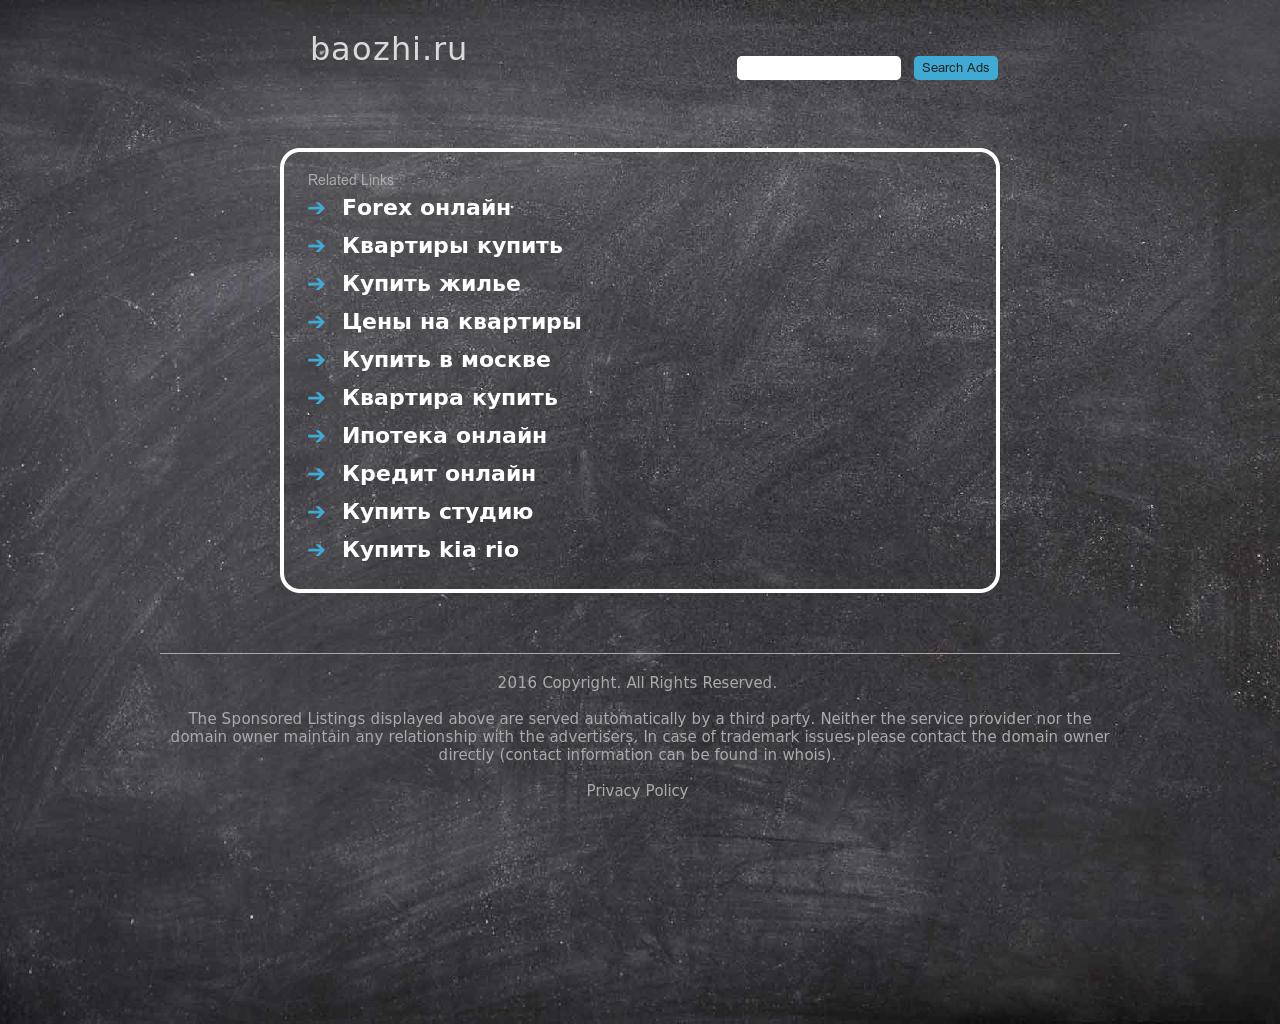 Изображение сайта baozhi.ru в разрешении 1280x1024